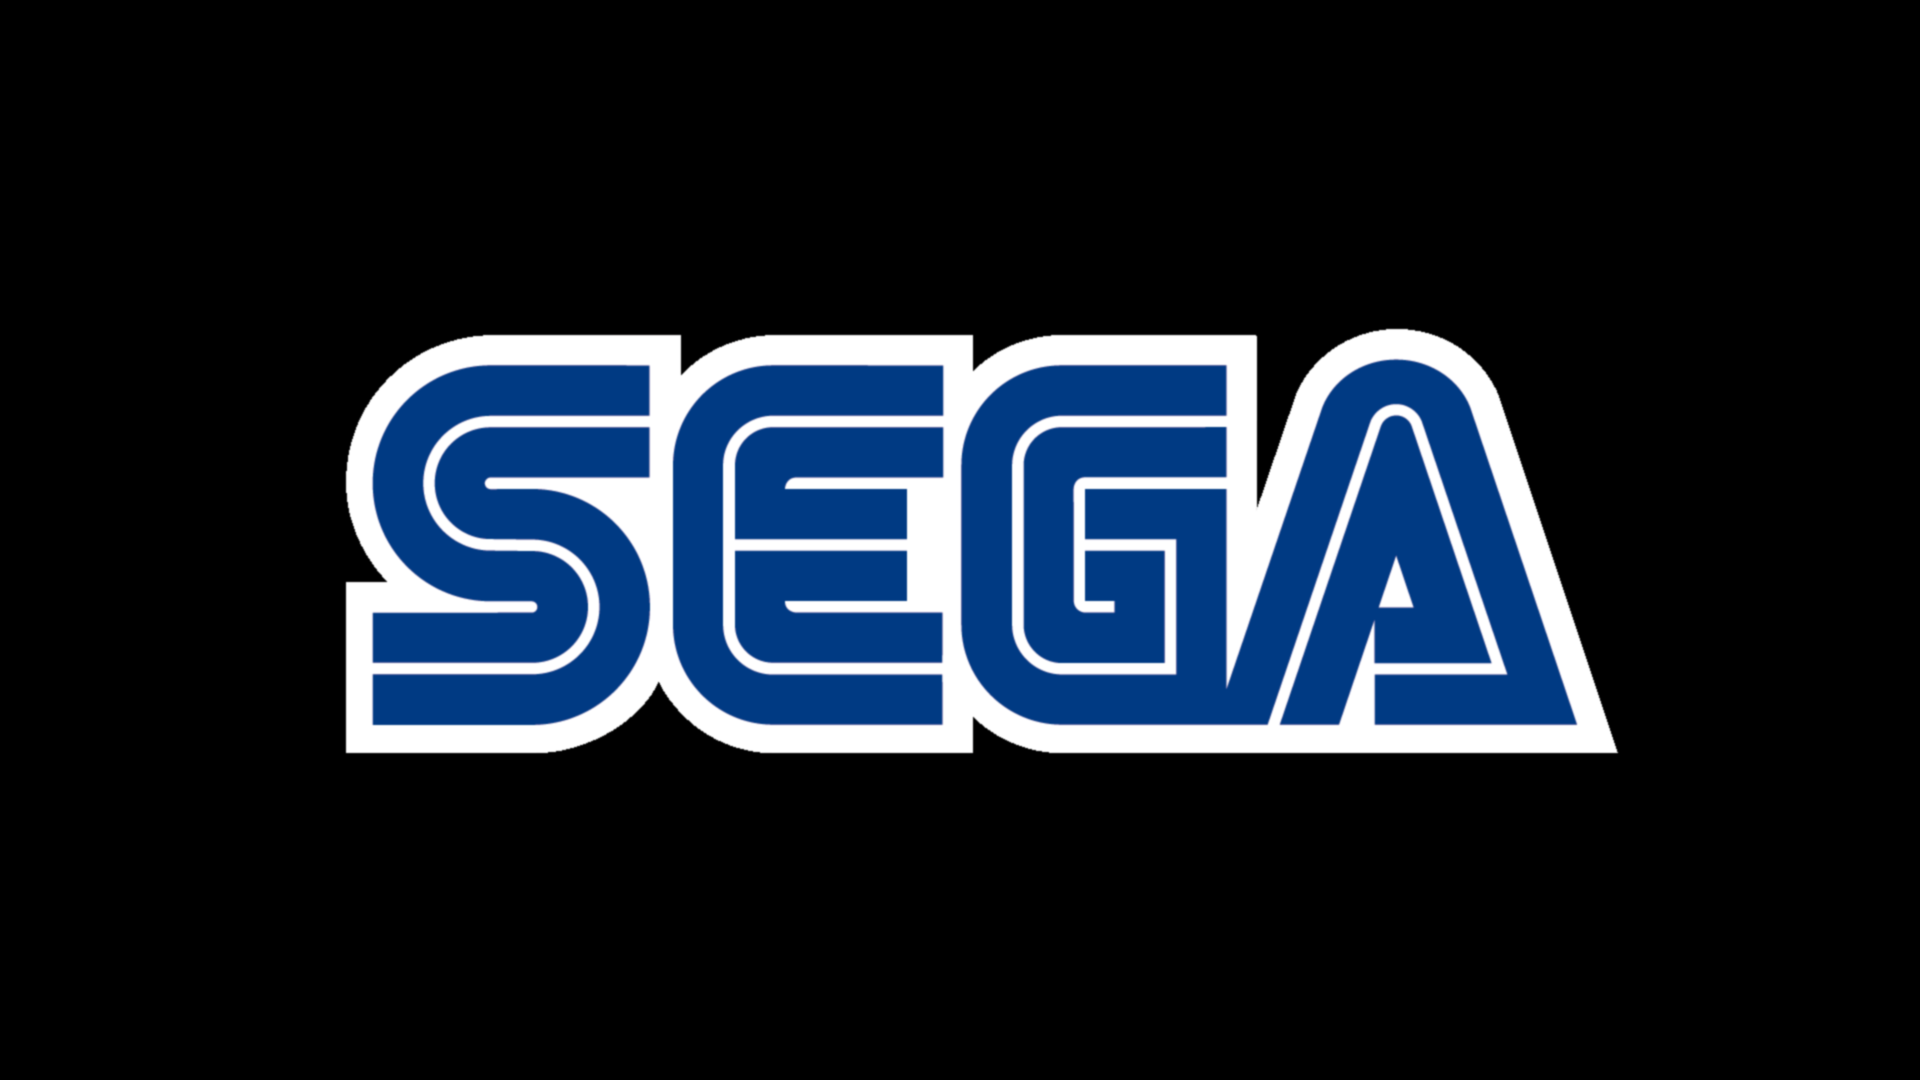 General 1920x1080 Sega black background minimalism brand logo video games simple background